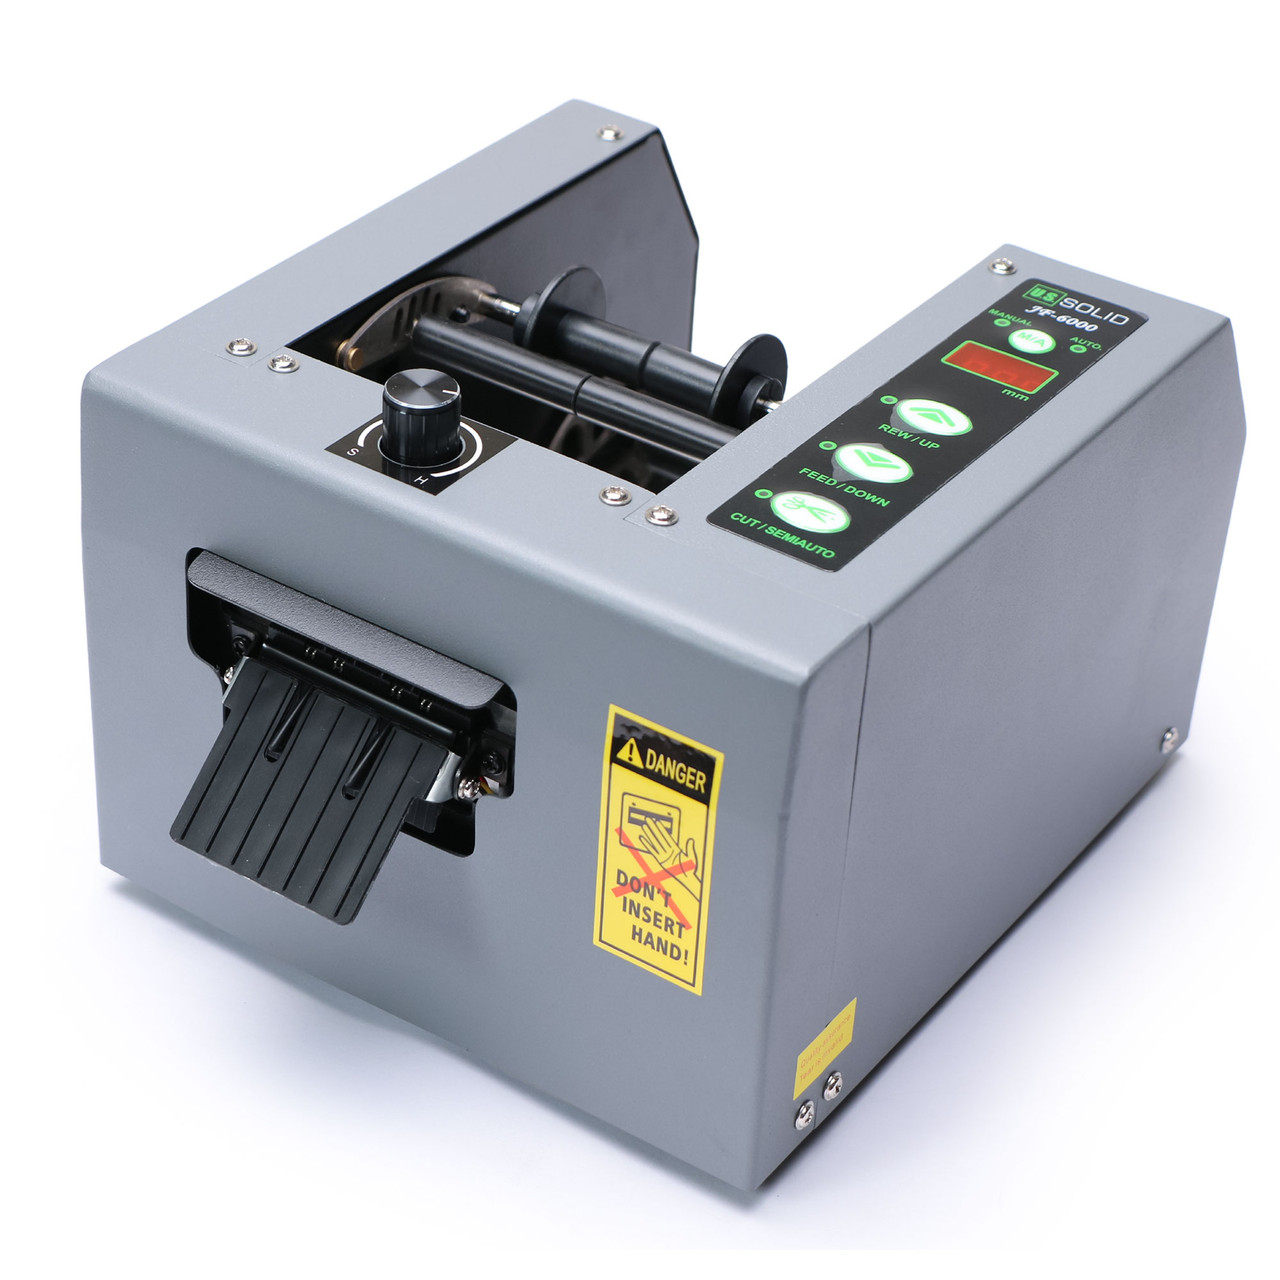 U.S. Solid Automatic Tape Dispenser JF-6000, 3 inch Tape Width